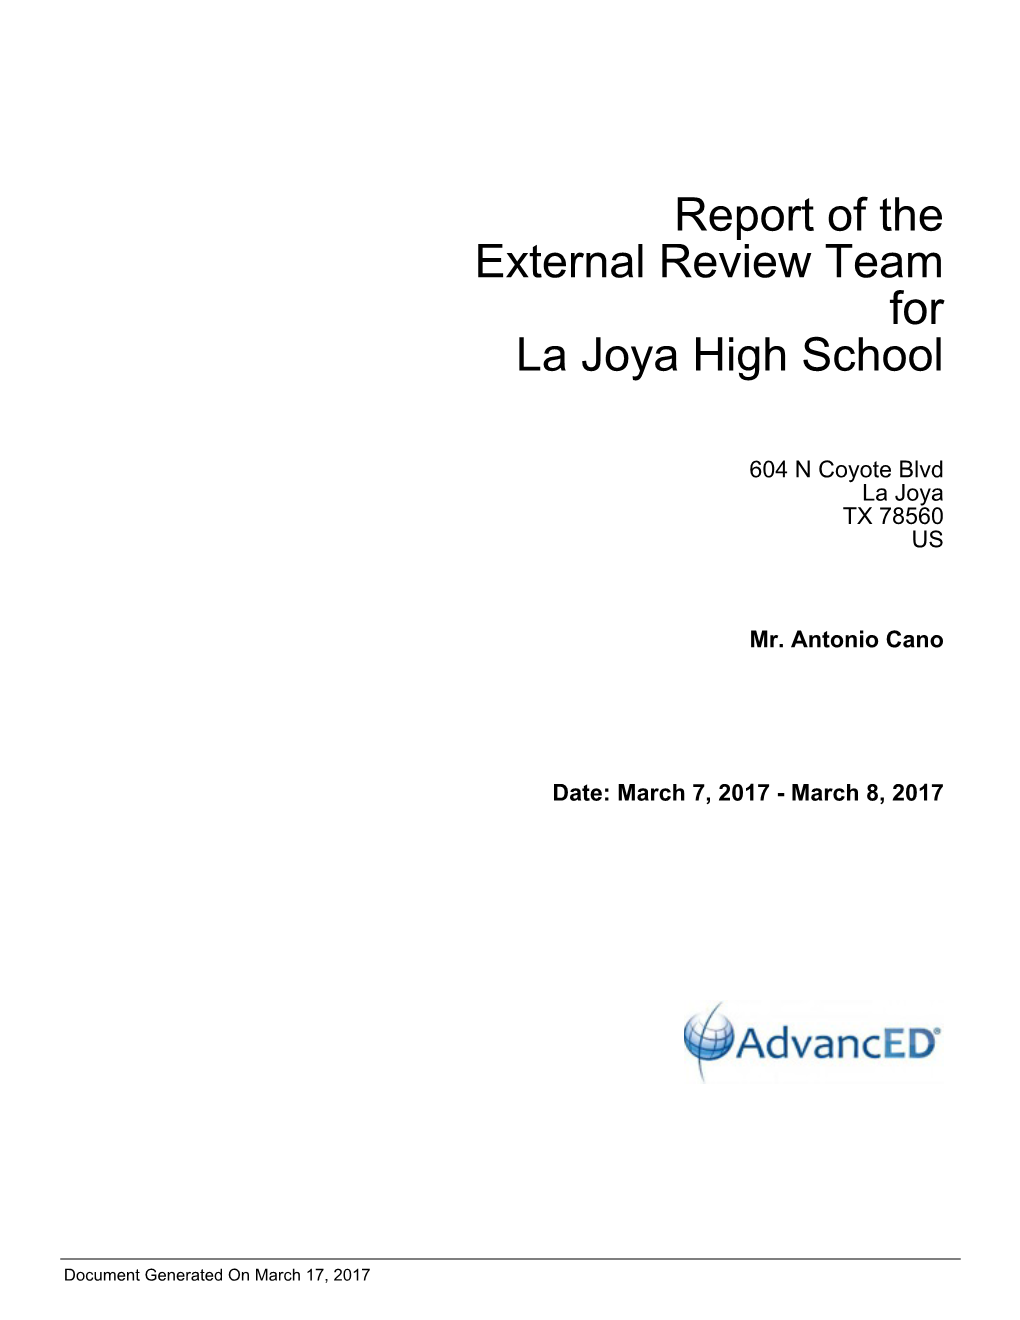 Report of the External Review Team for La Joya High School